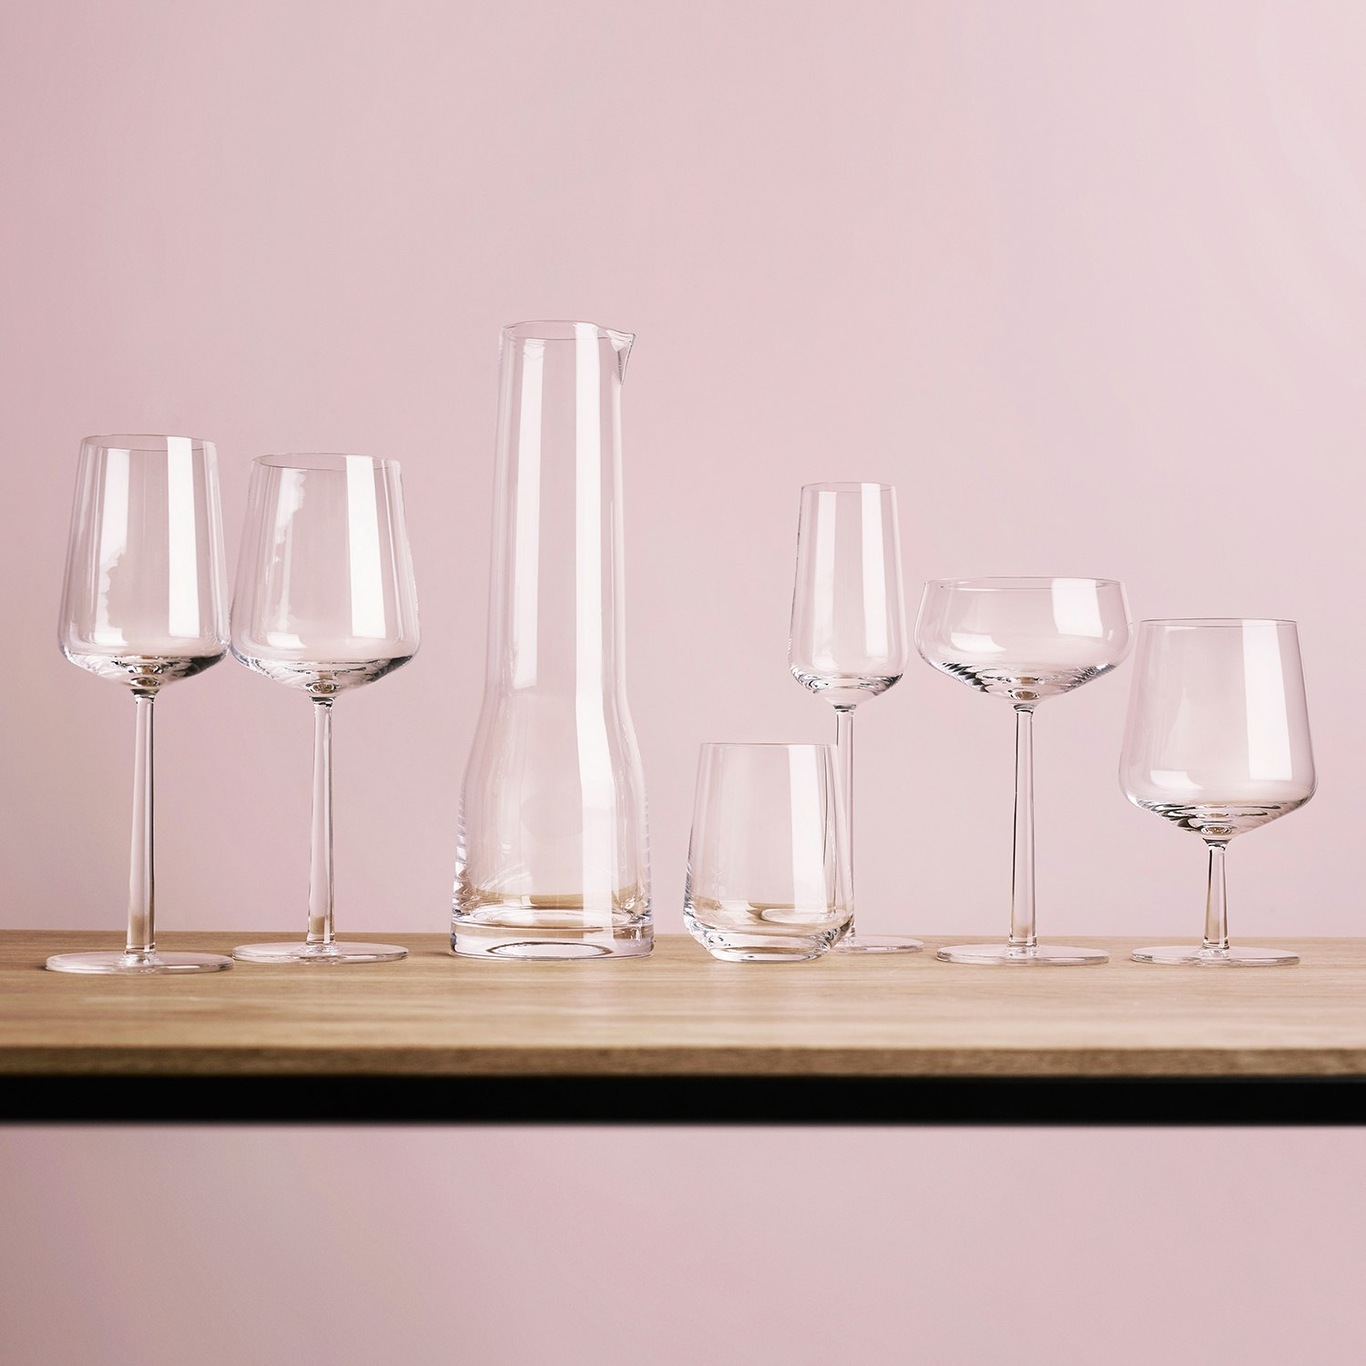 https://royaldesign.com/image/2/iittala-essence-champagne-glass-21-cl-4-pcs-4?w=800&quality=80